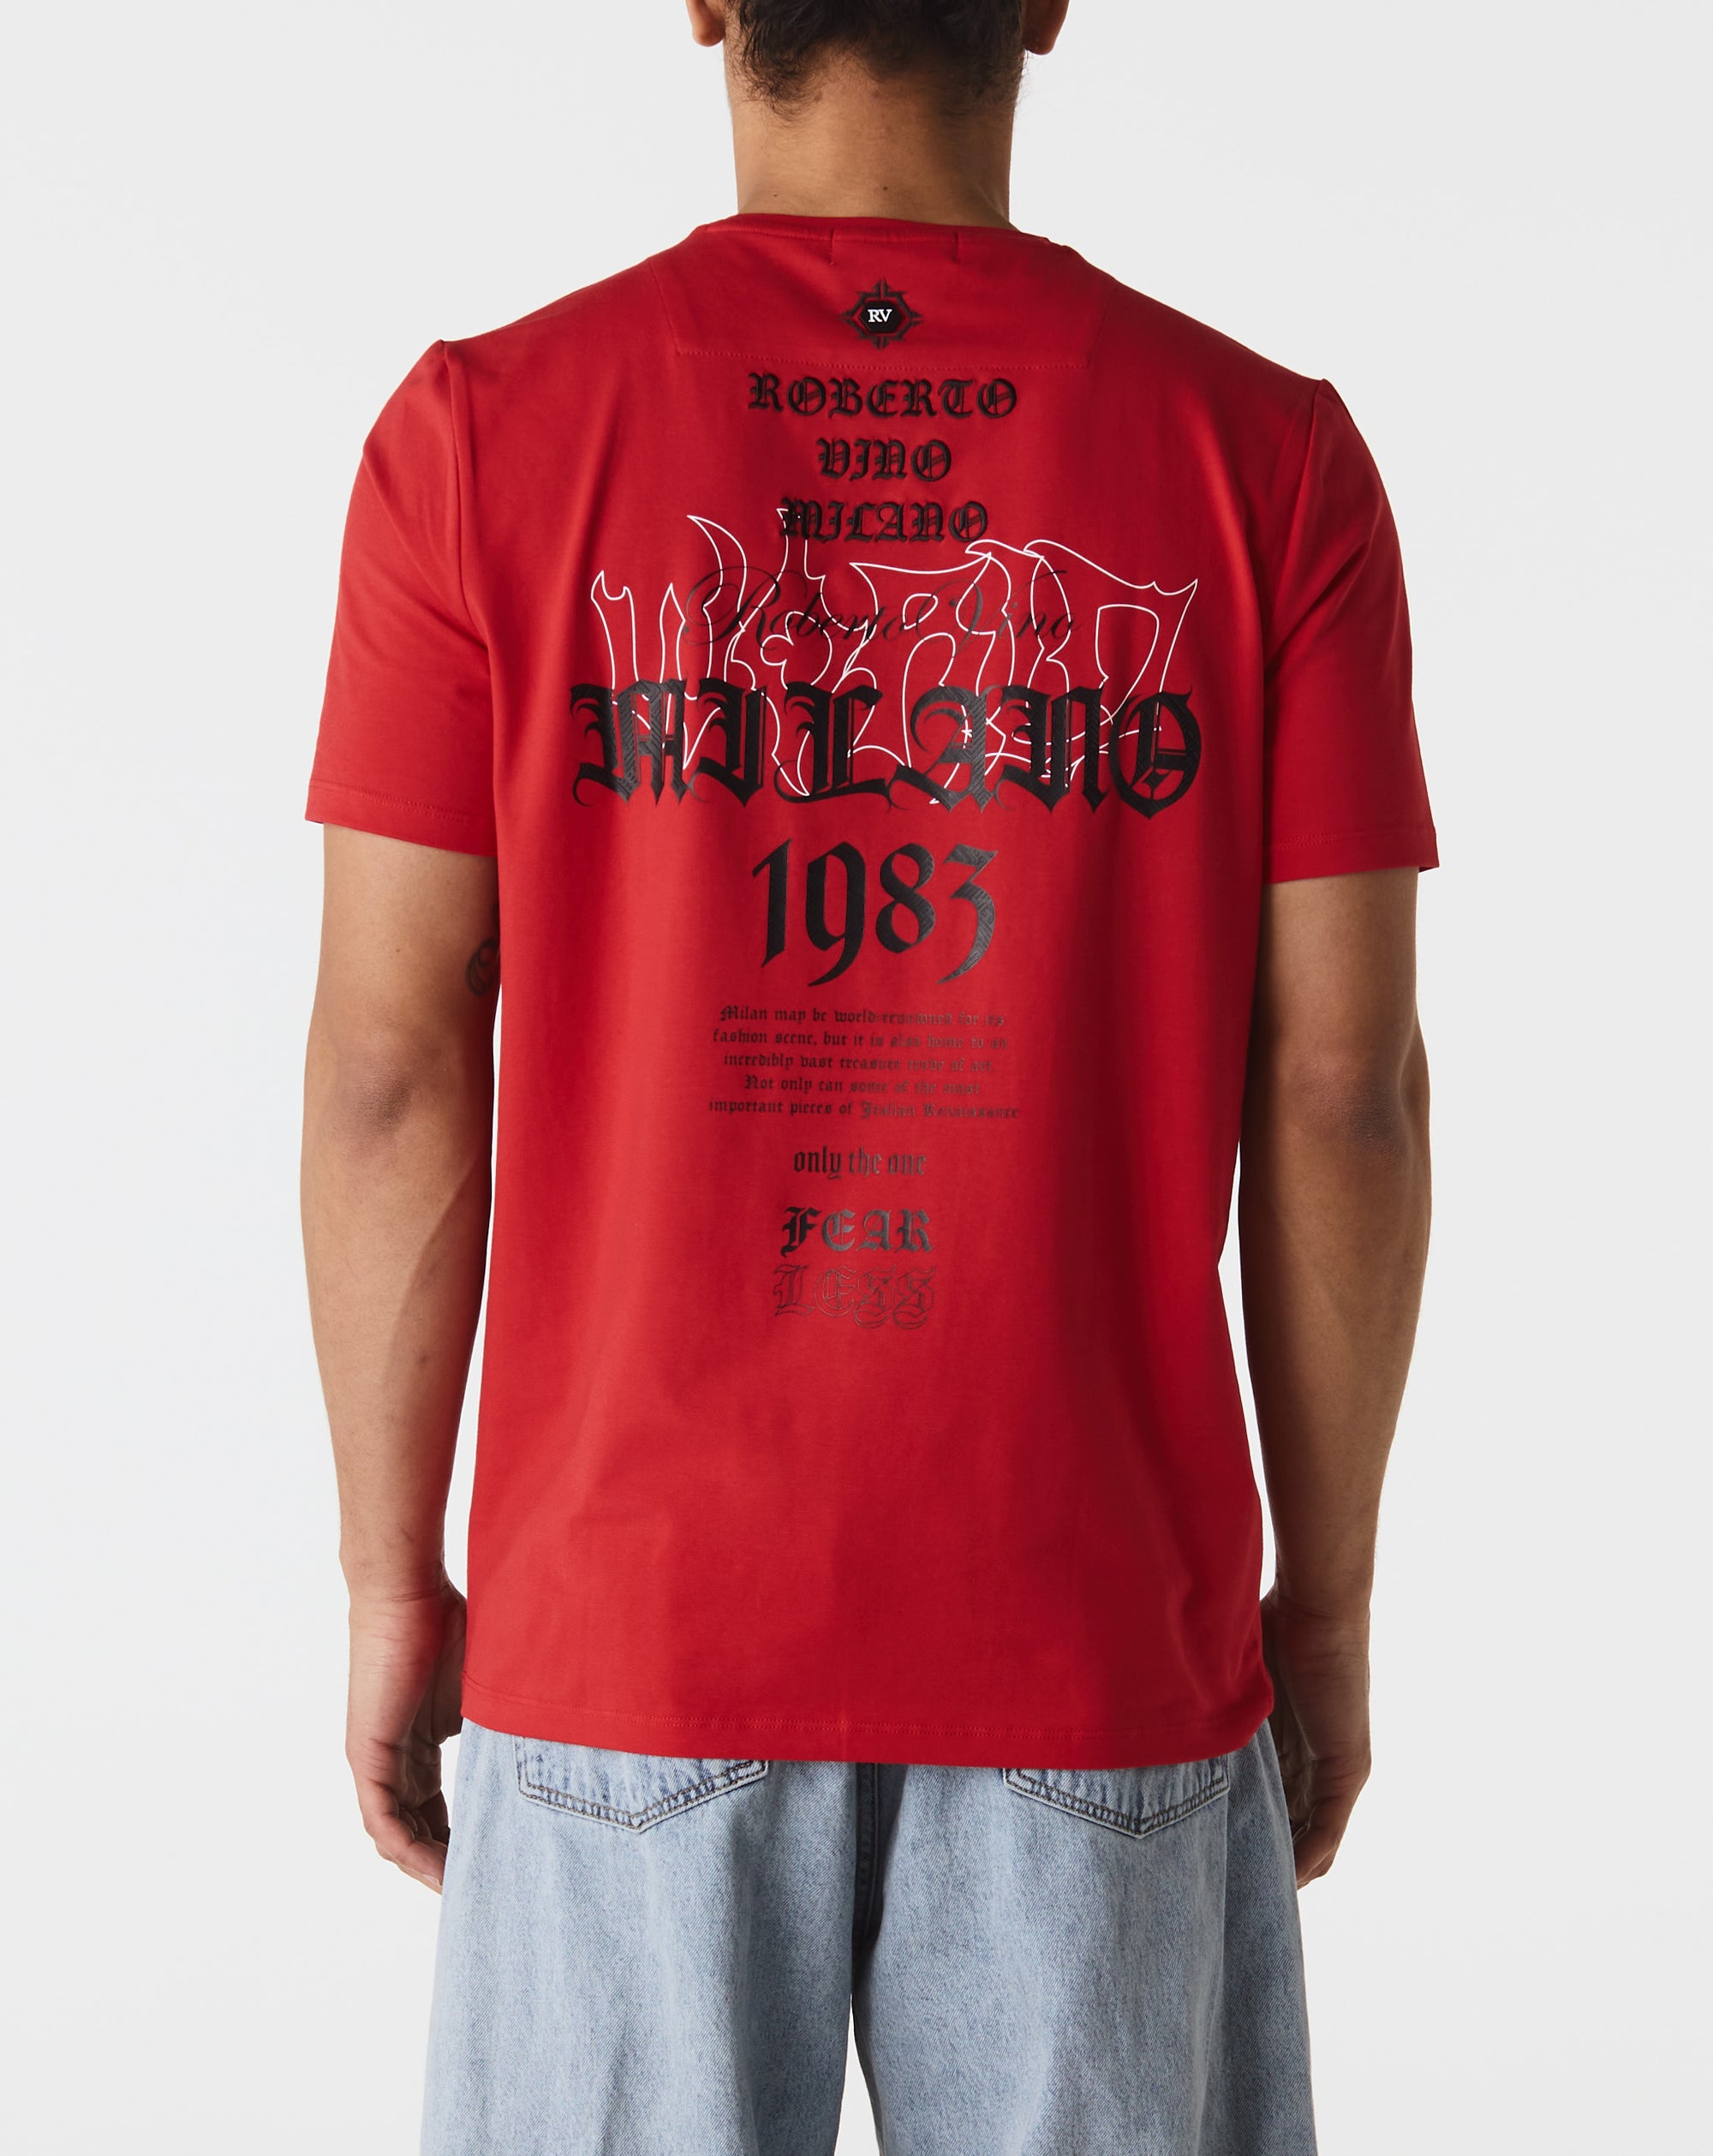 Roberto Vino Milano 1983 T-Shirt - Rule of Next Apparel